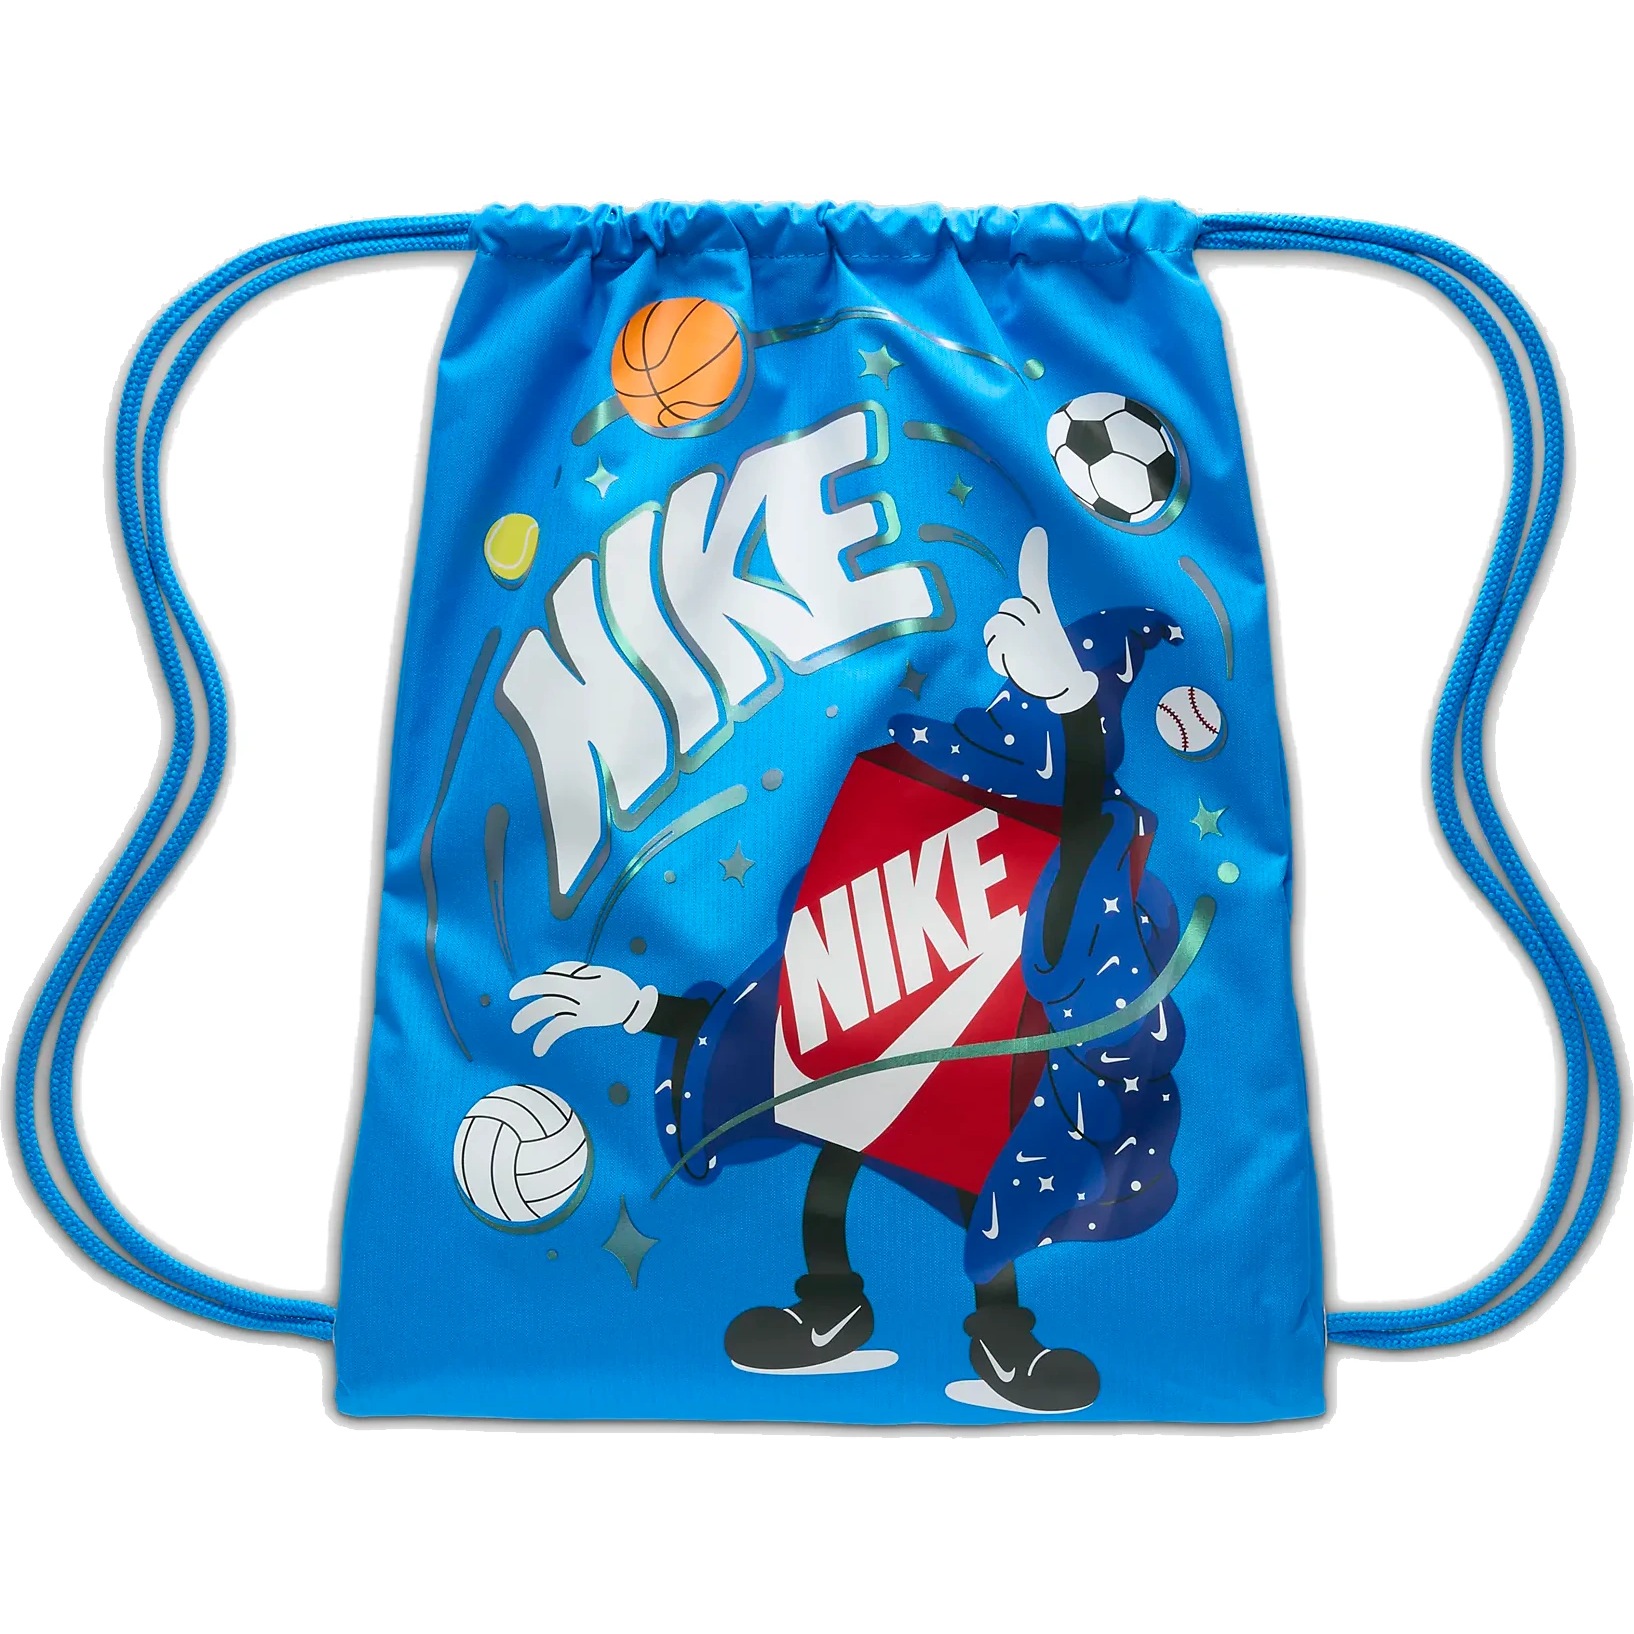 Productfoto van Nike Gymtas Kinderen (12L) - Boxy - photo blue FN1360-406